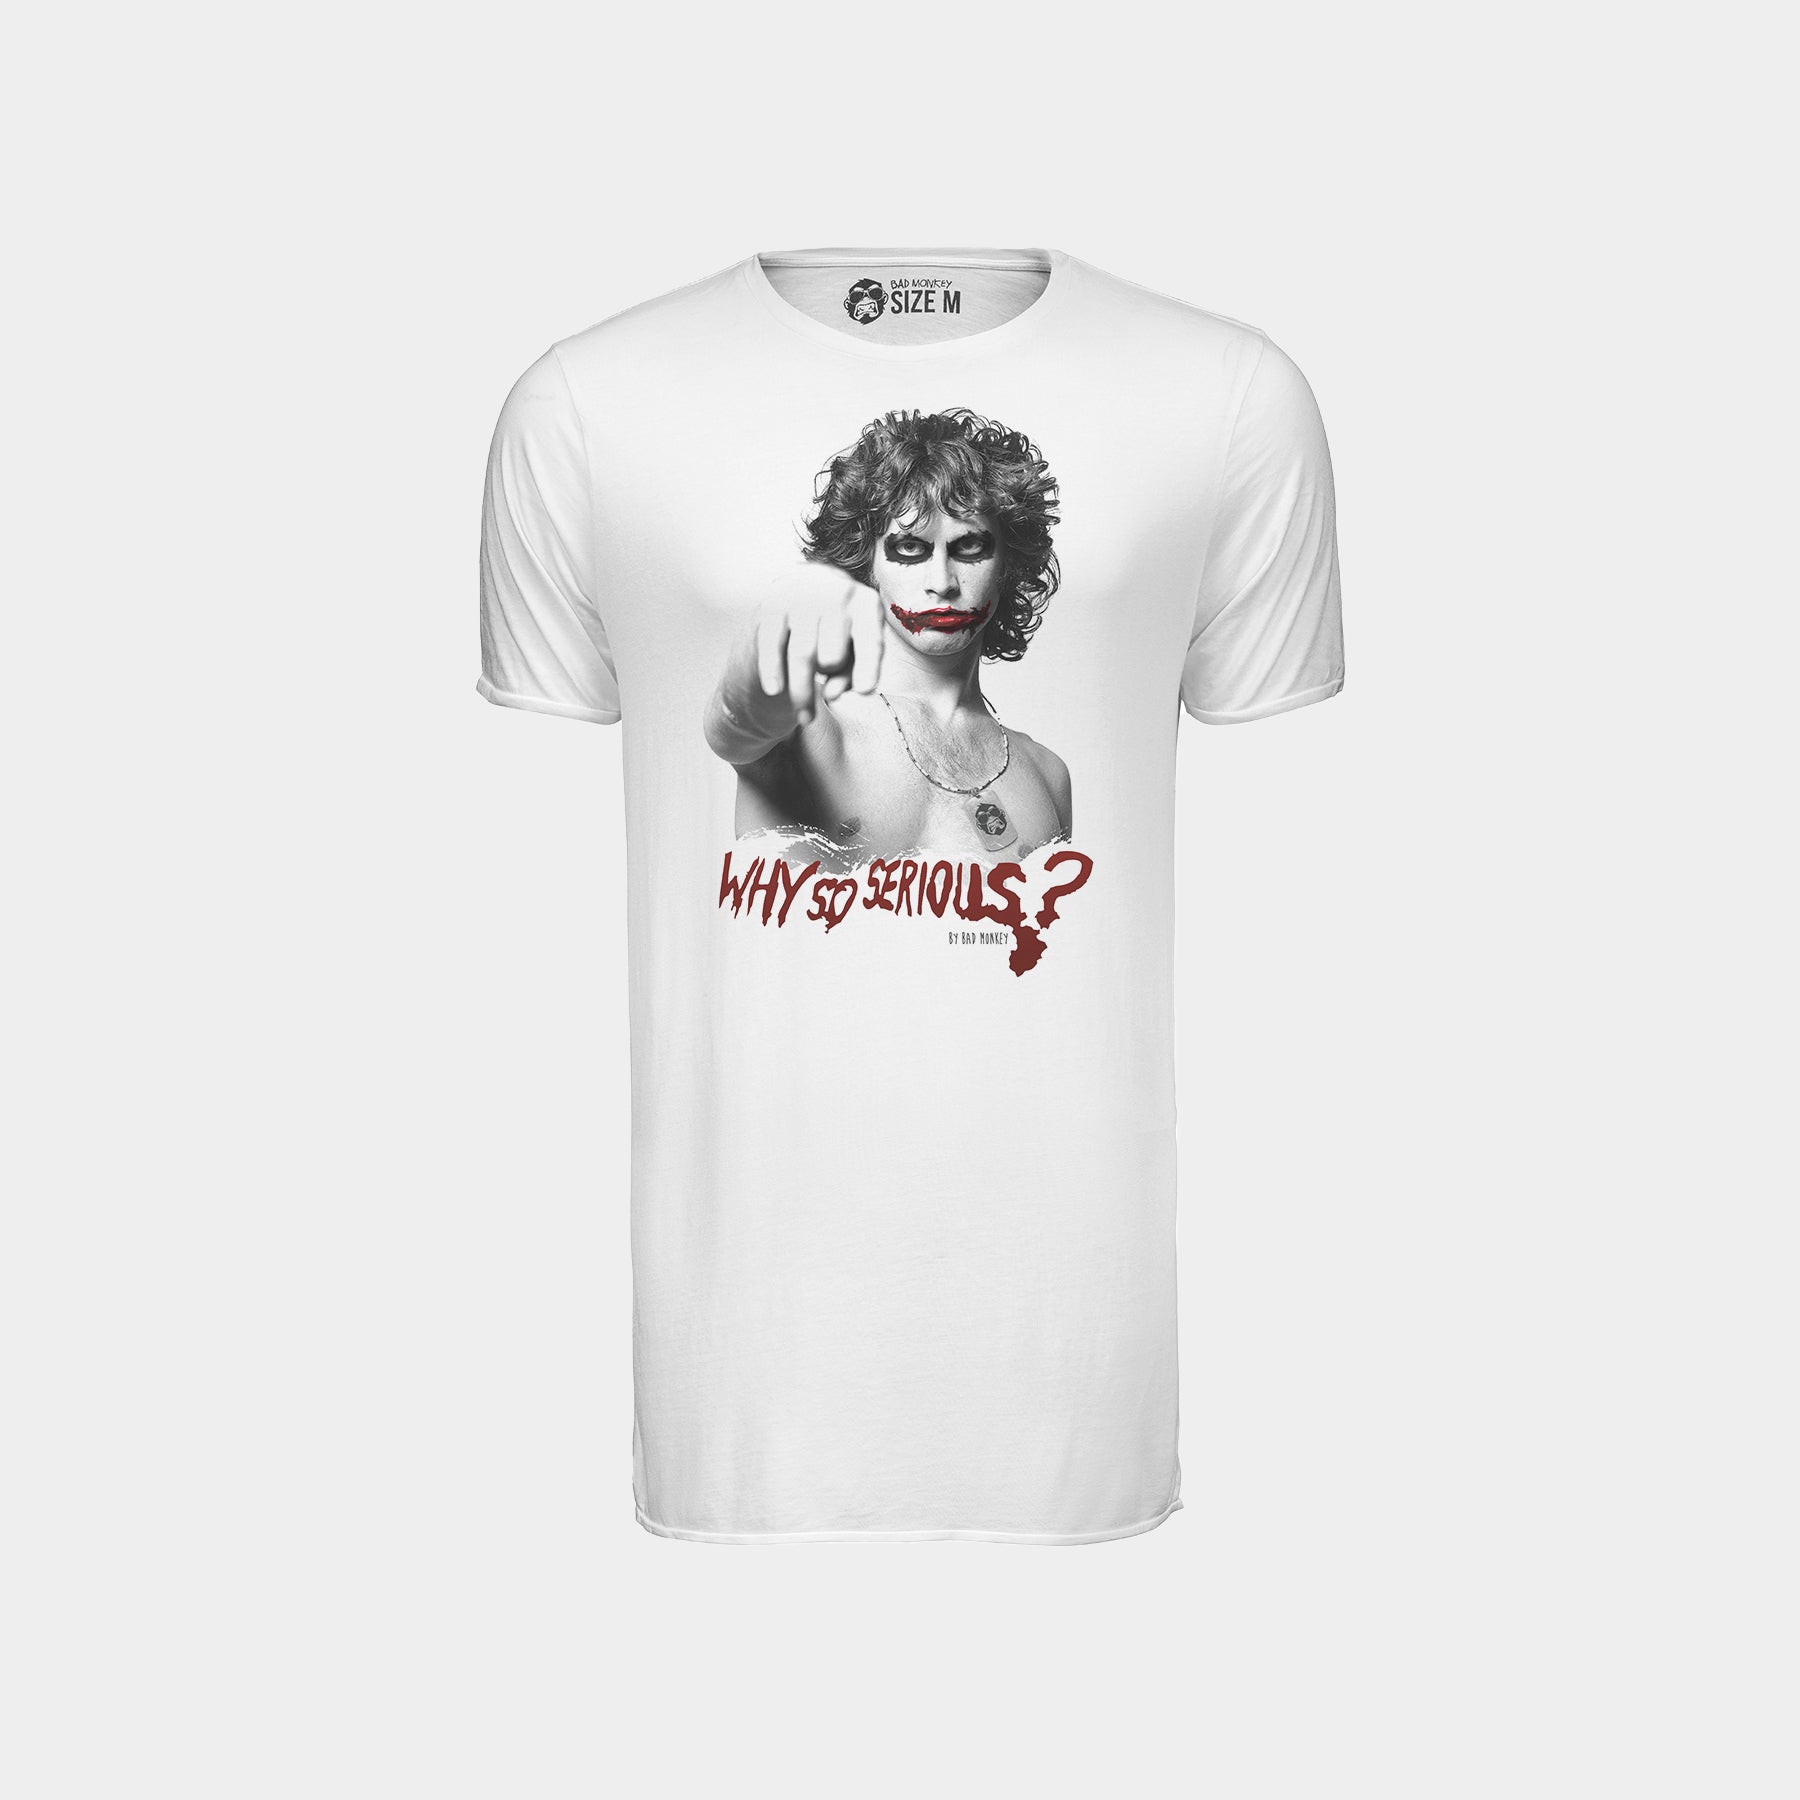 Joker Jim White Tshirt | Available only in L